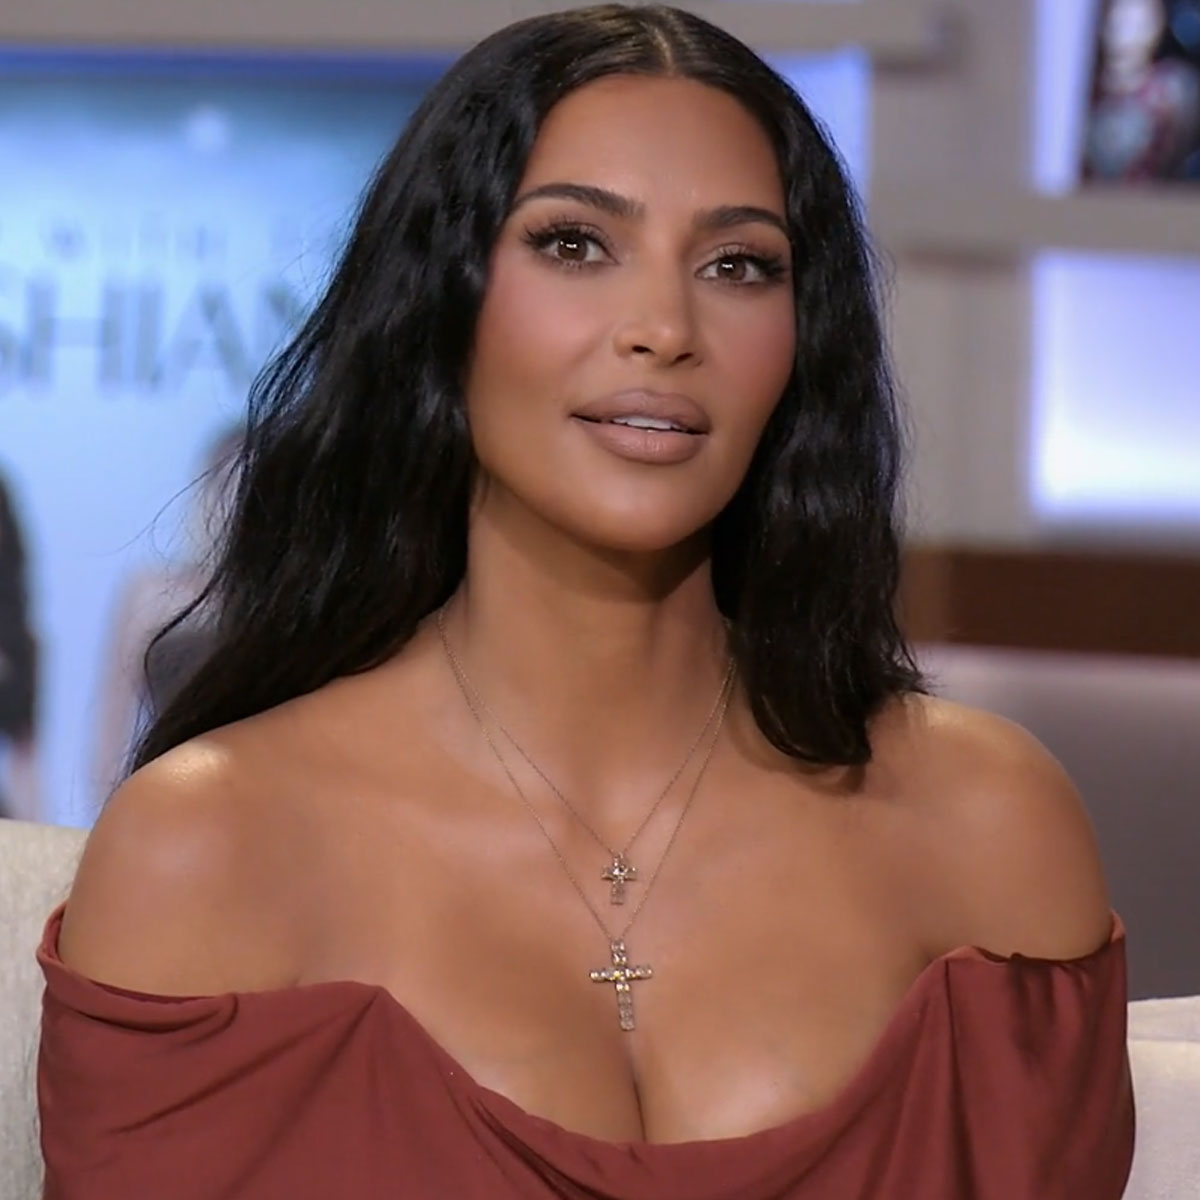 Celebrity Porn Kim Kardashian - Kim Kardashian Admits Infamous Sex Tape Helped Success of KUWTK - E! Online